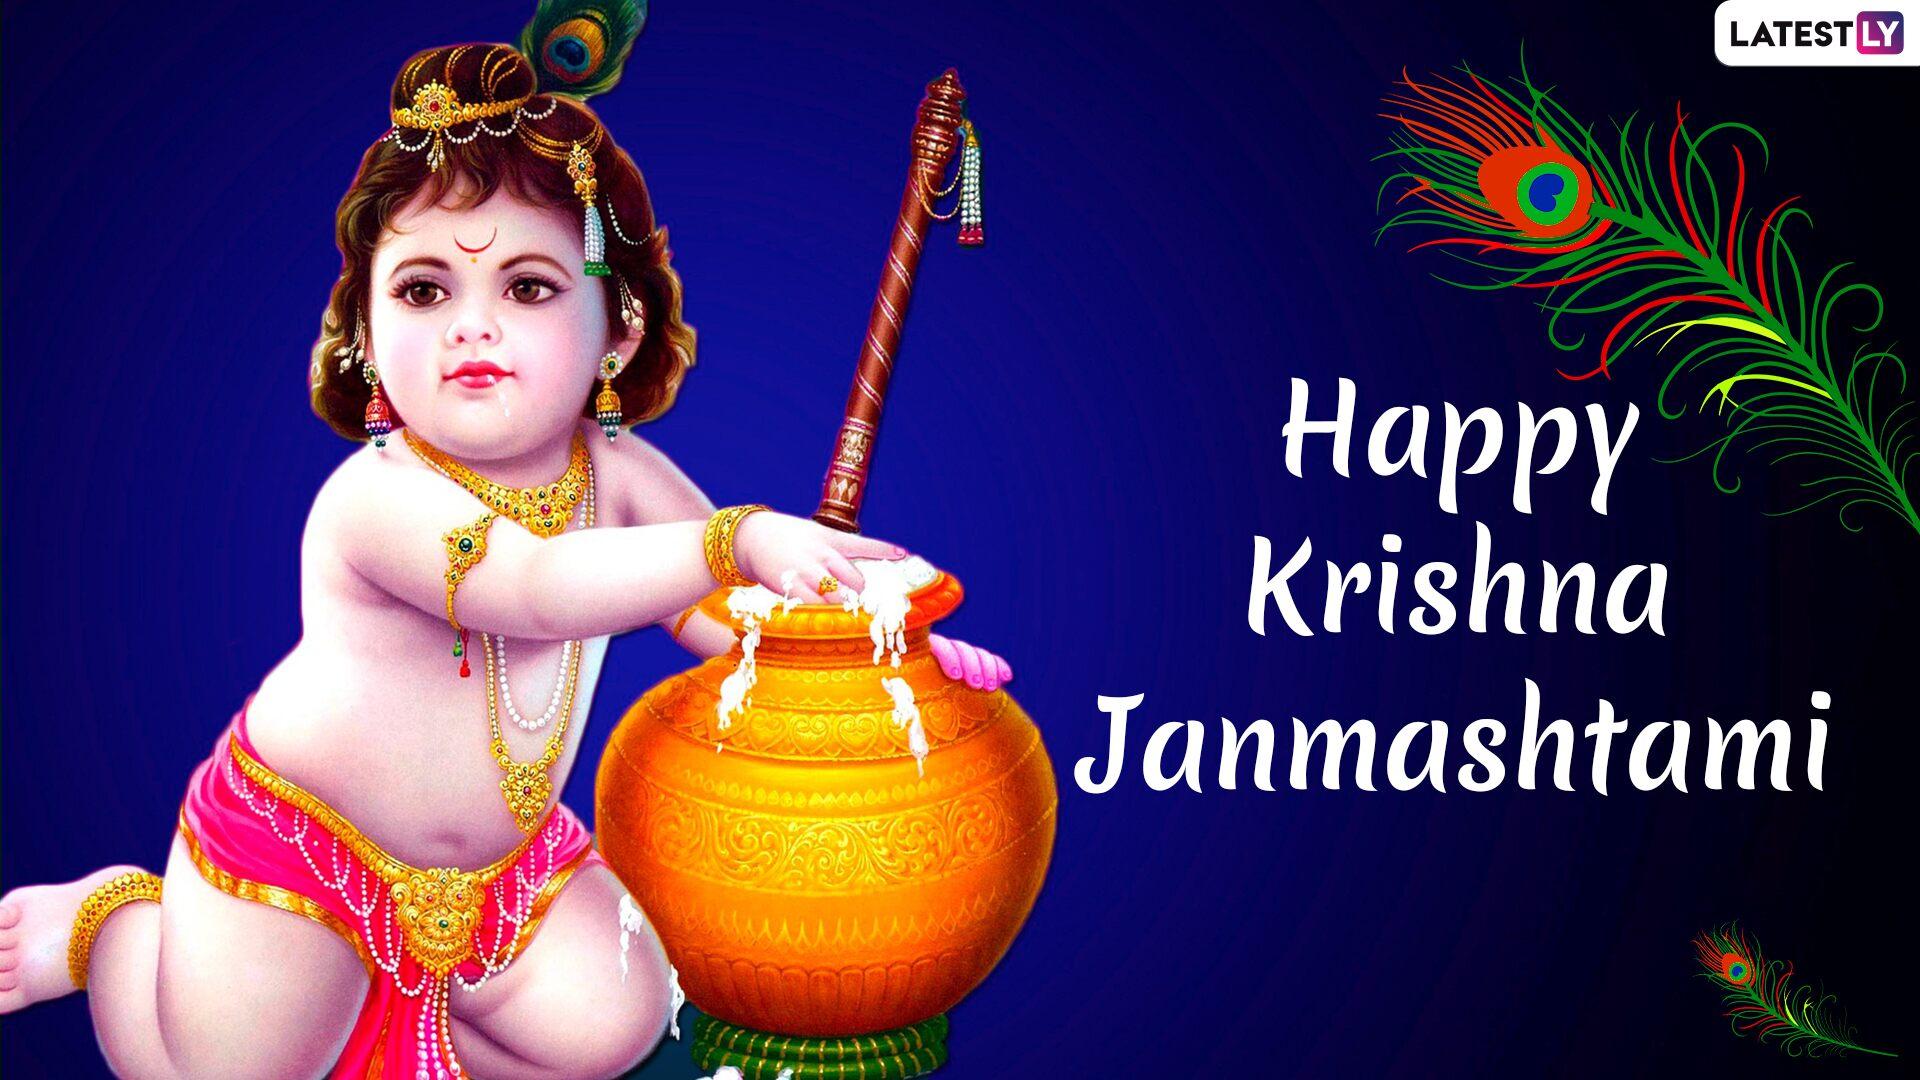 Janmashtami Image & Lord Krishna HD Wallpapers for Free Download